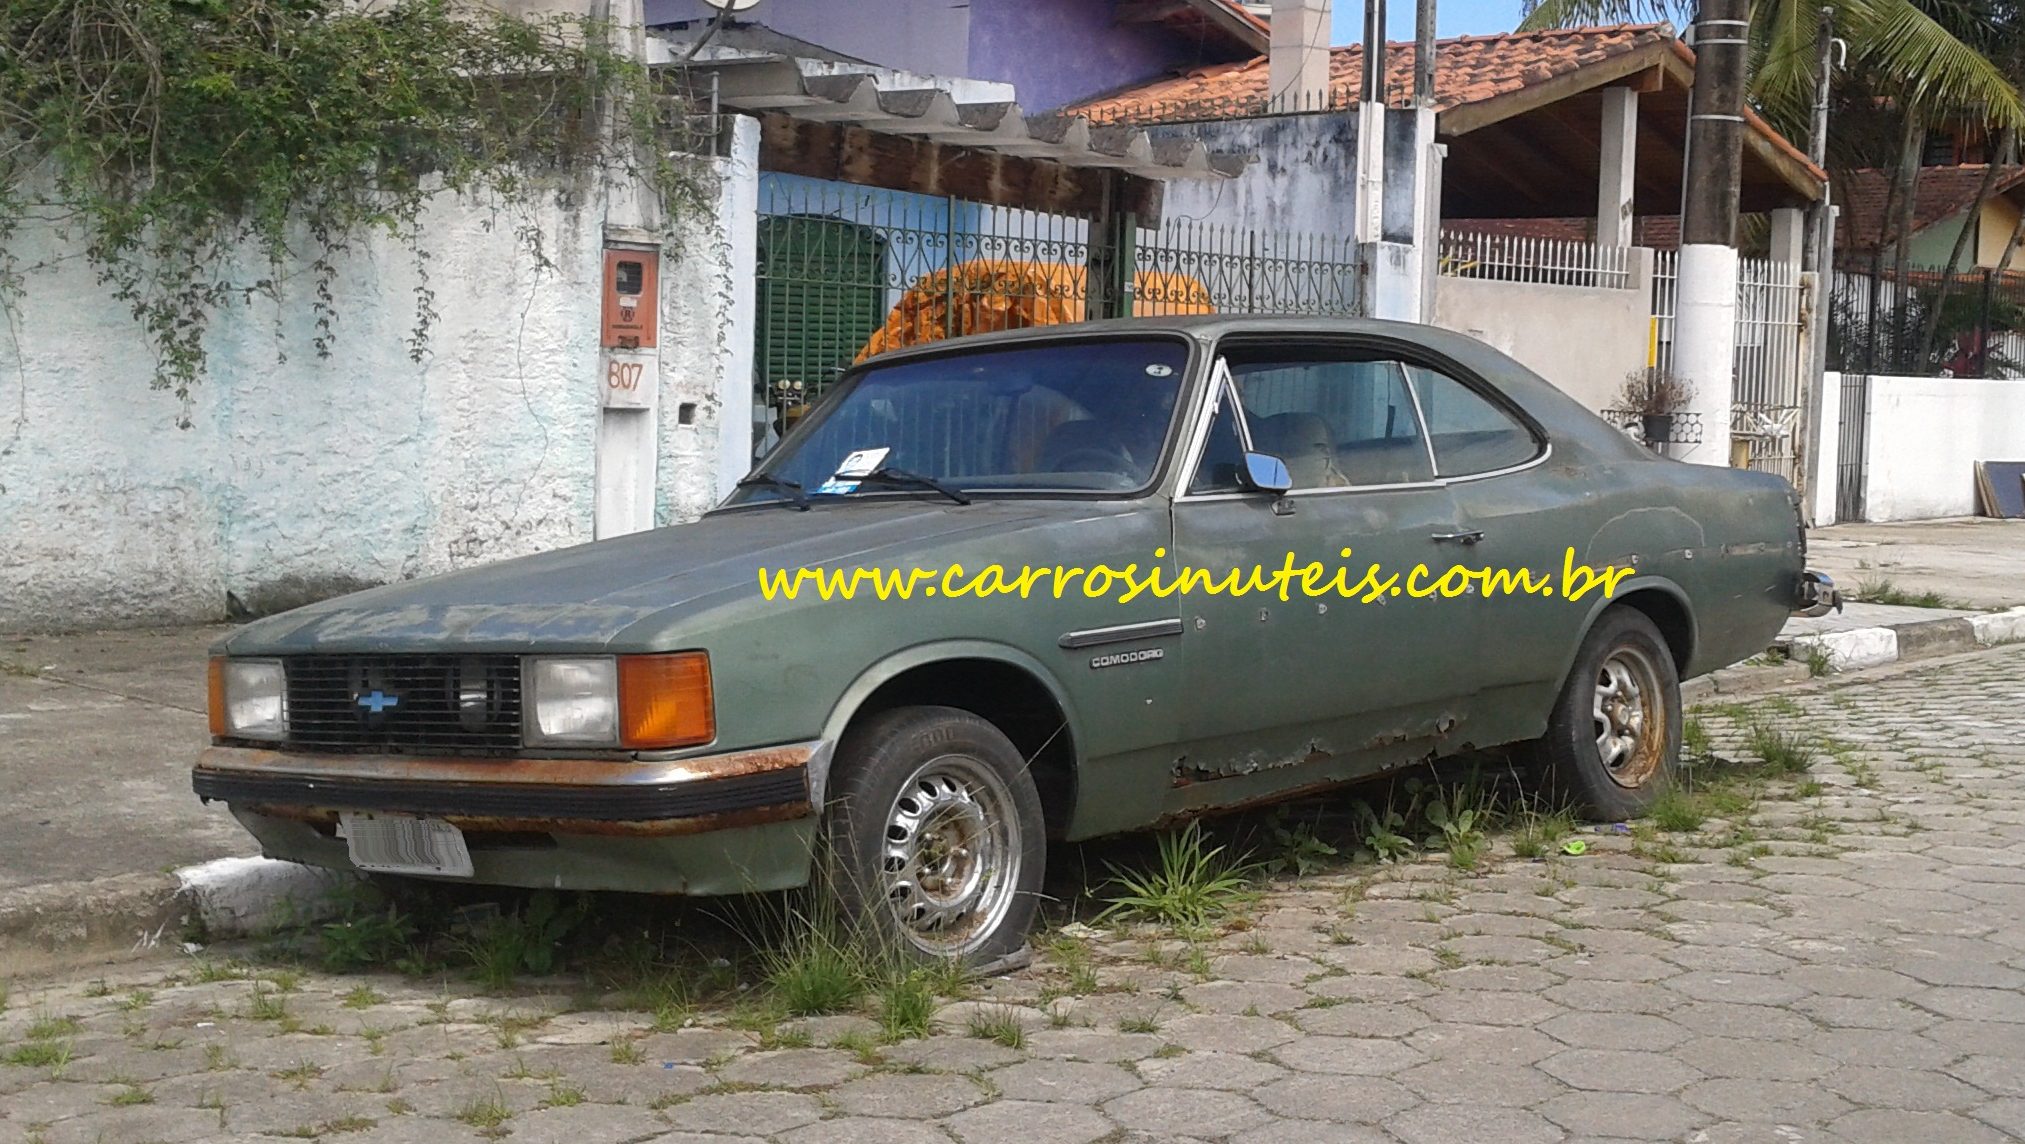 Chevrolet Opala, Alberto – Caraguatatuba-SP